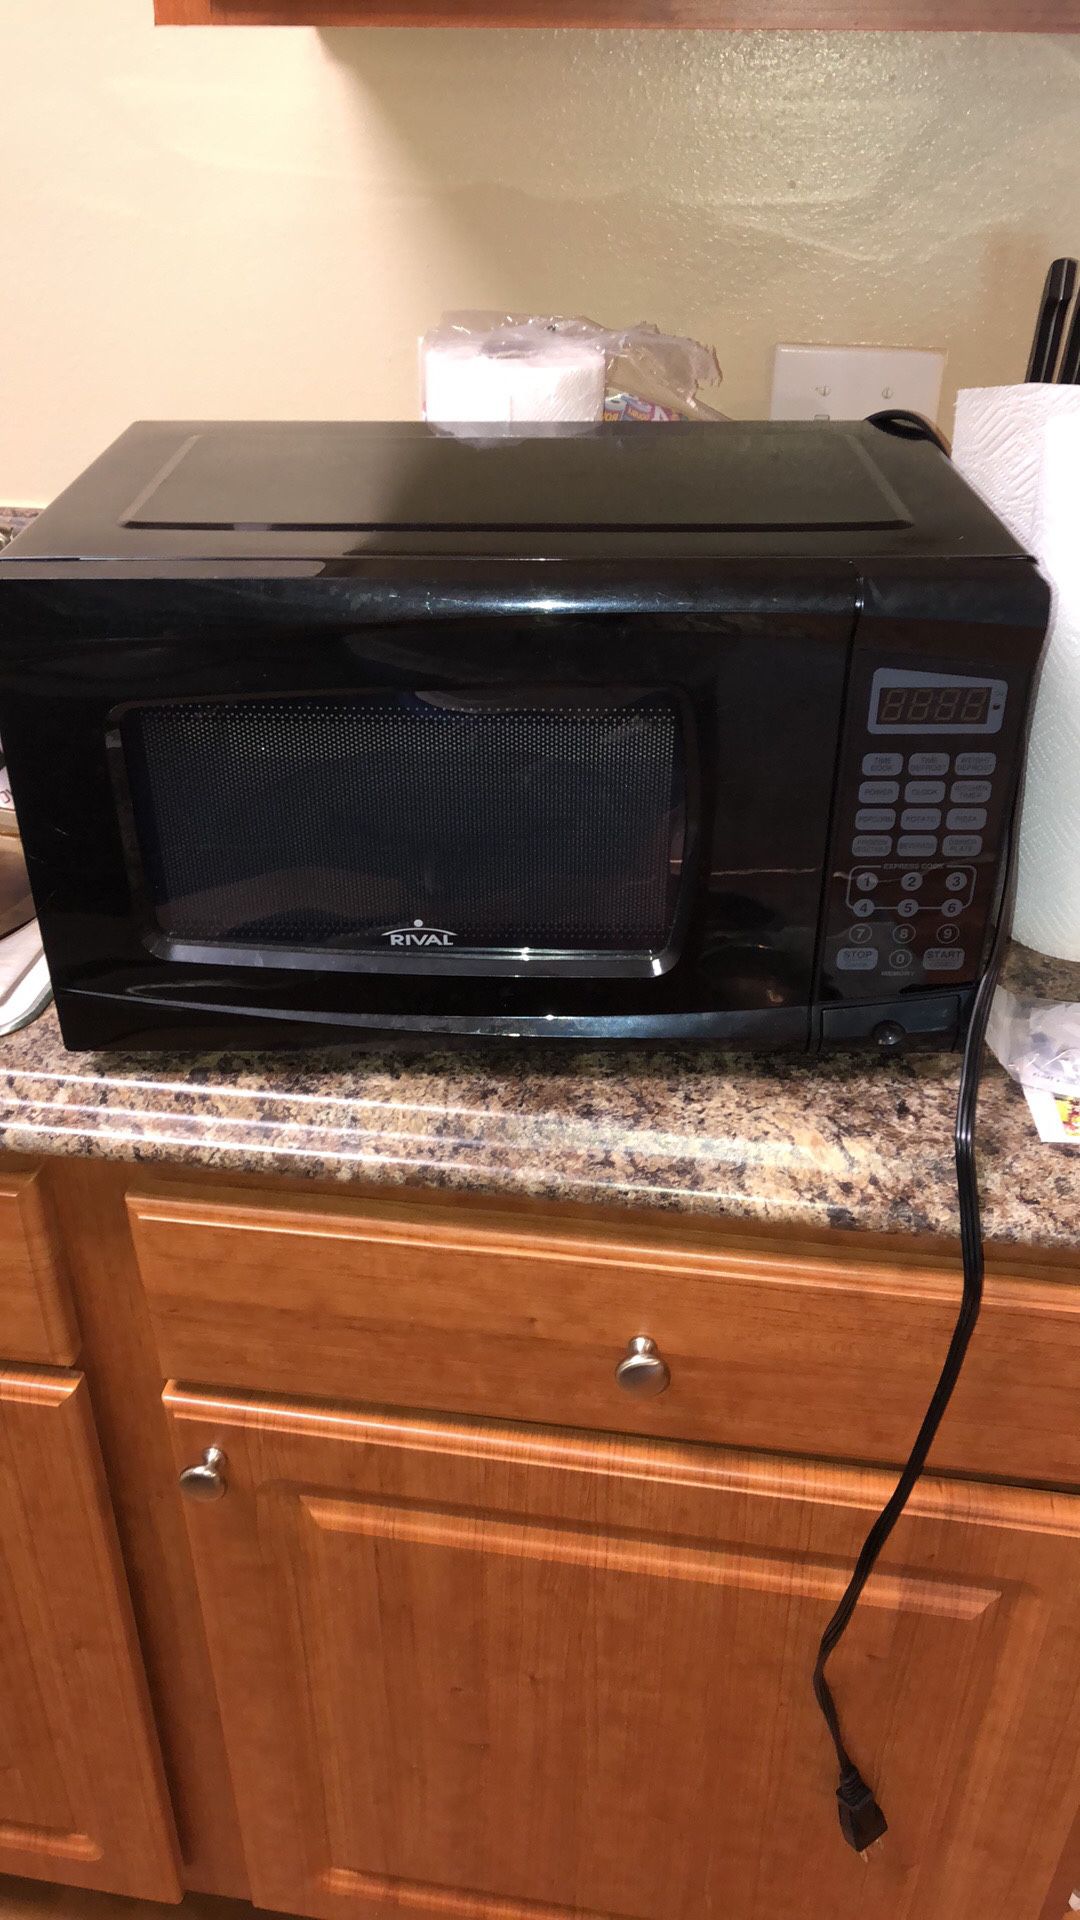 700 watt microwave